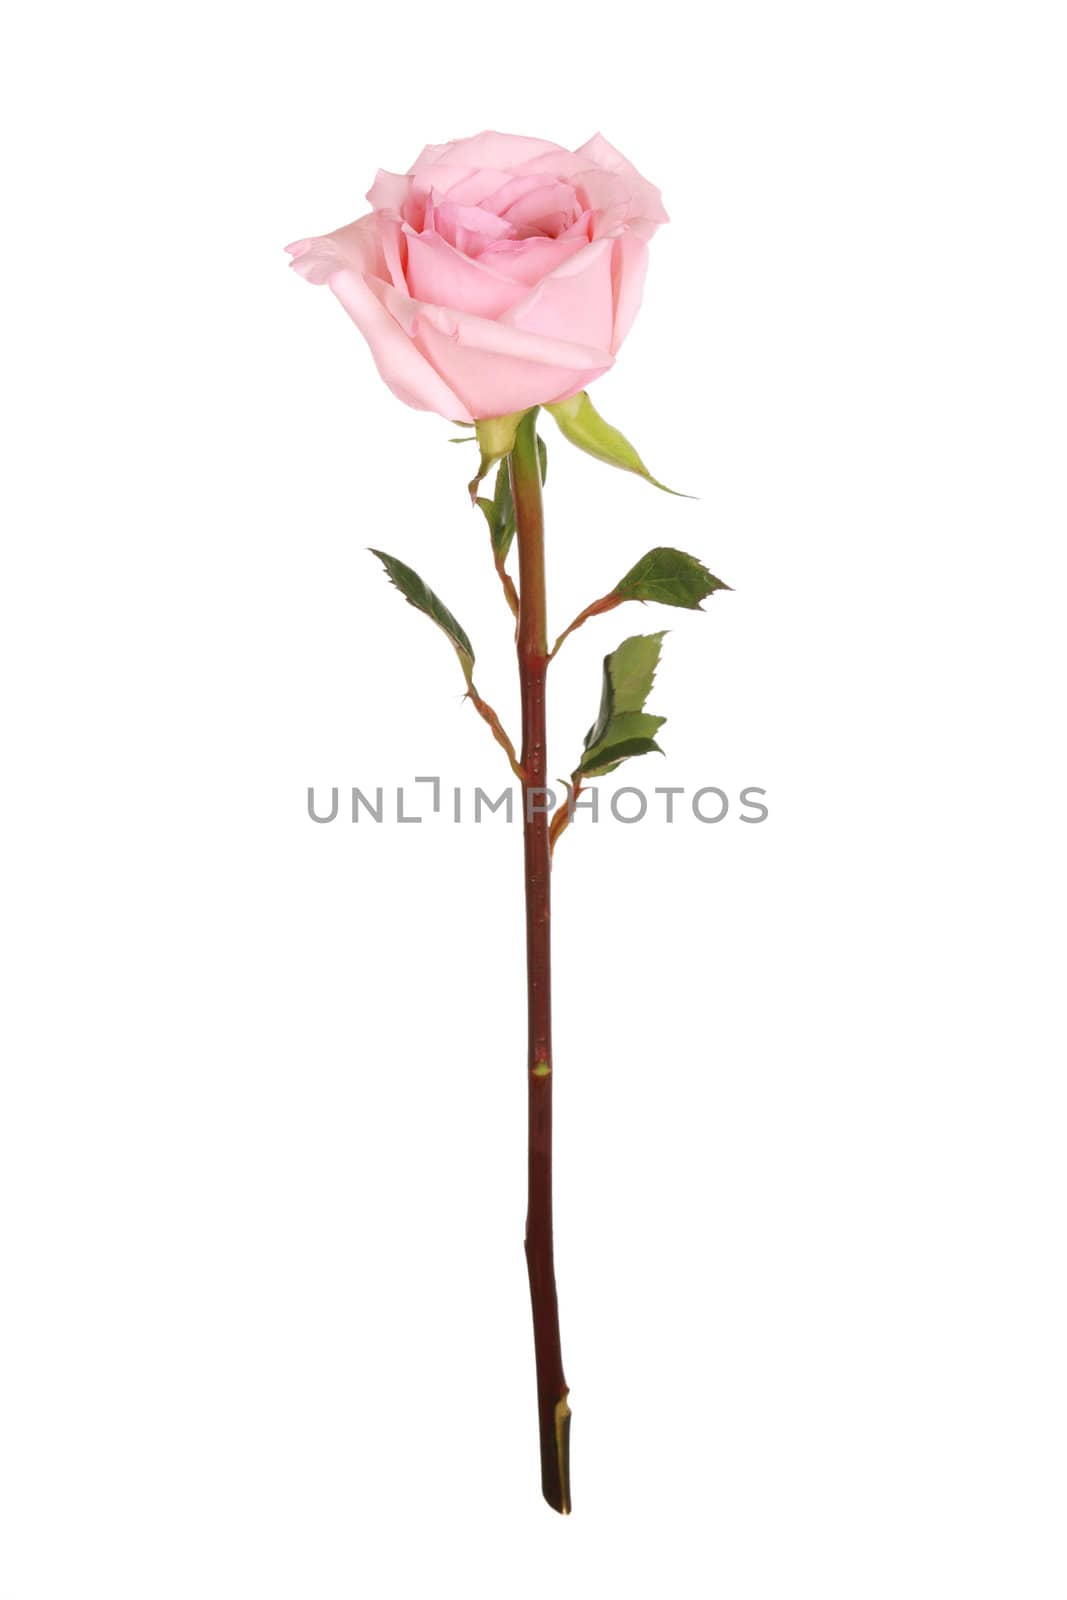 Single pink rose on white by jarenwicklund